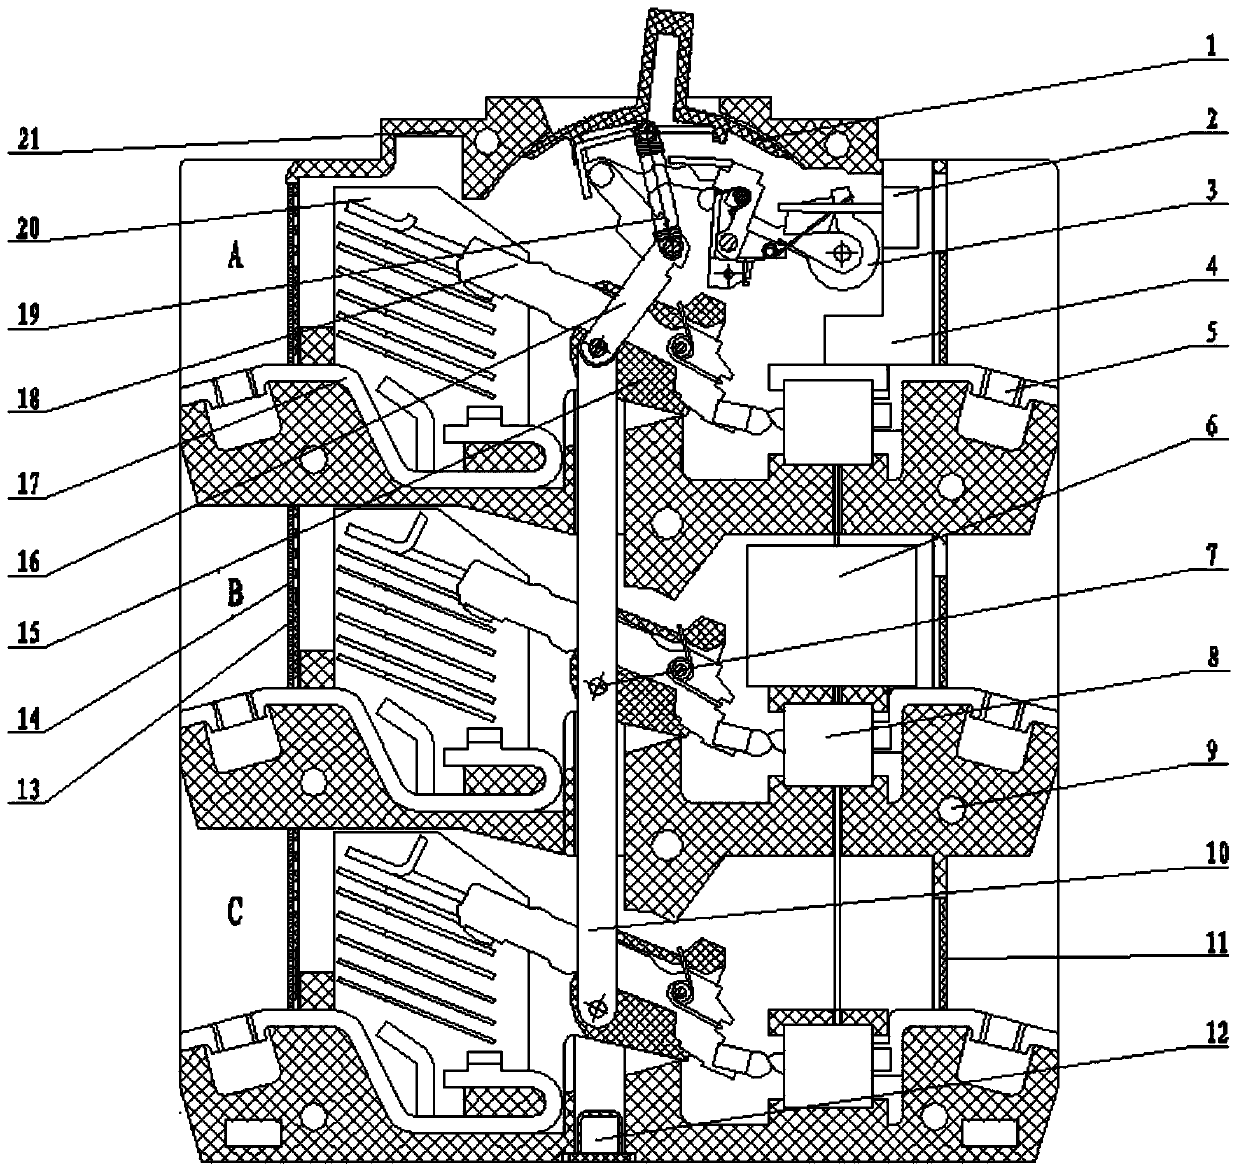 A vertical structure circuit breaker